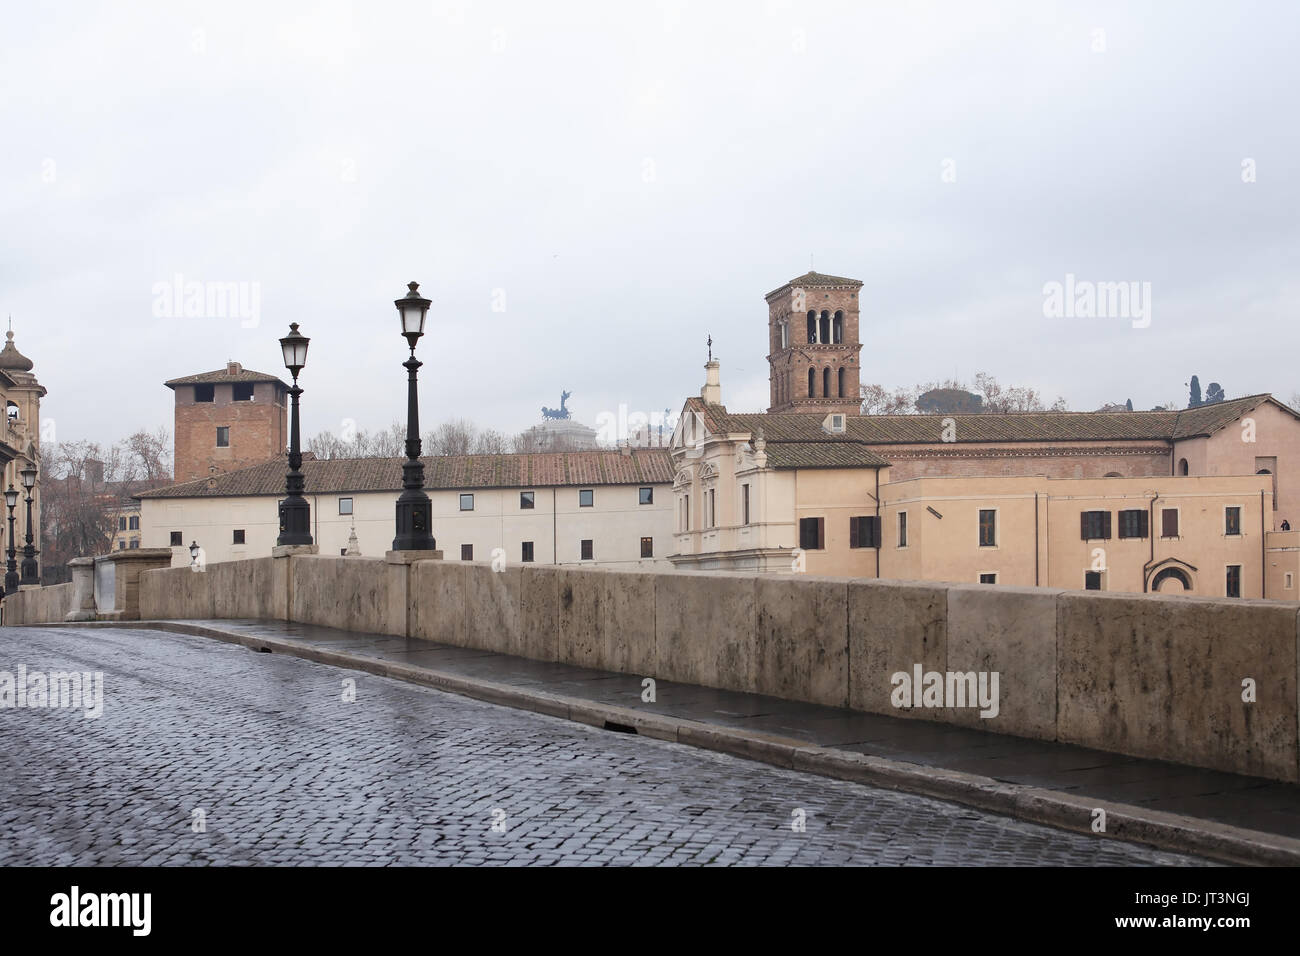 Tranguil urban scene. Old stone bridge with street lamps, Rome, Italy Stock Photo